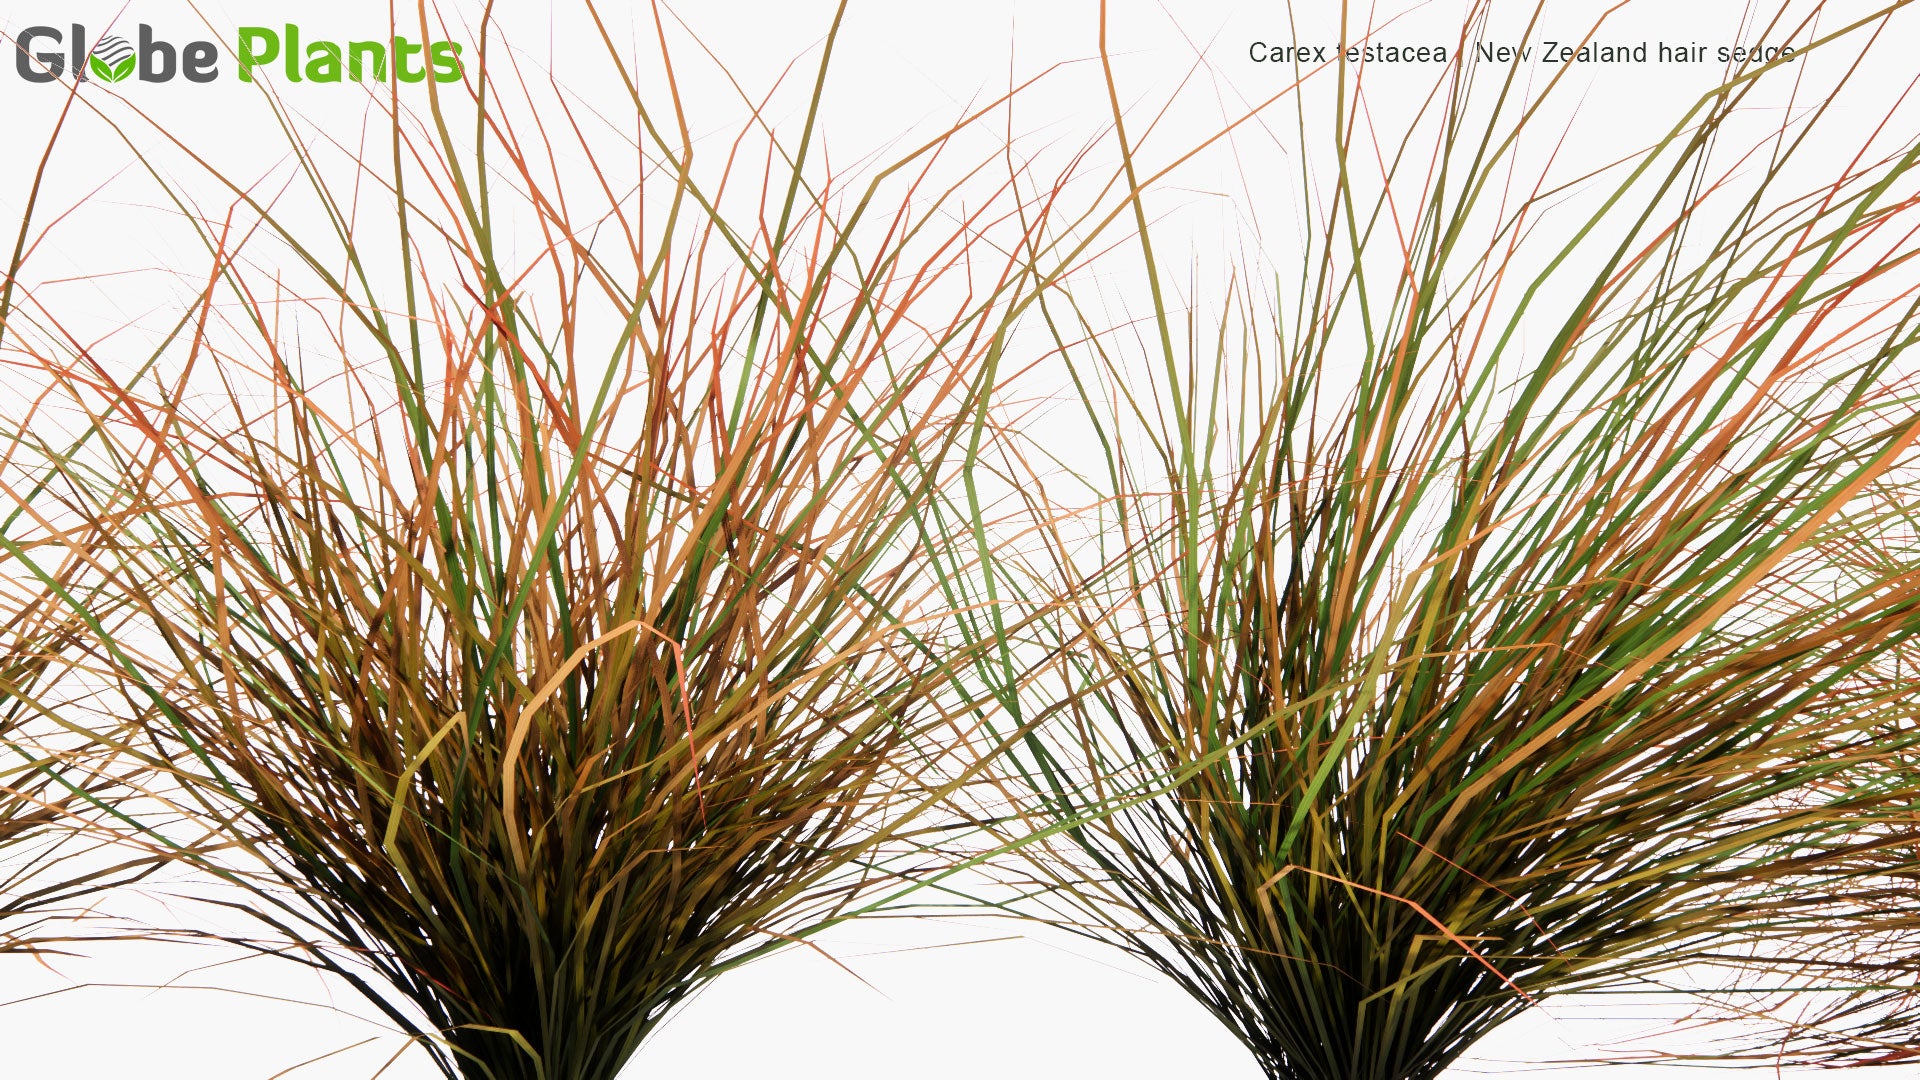 Low Poly Carex Testacea - New Zealand Hair Sedge (3D Model)